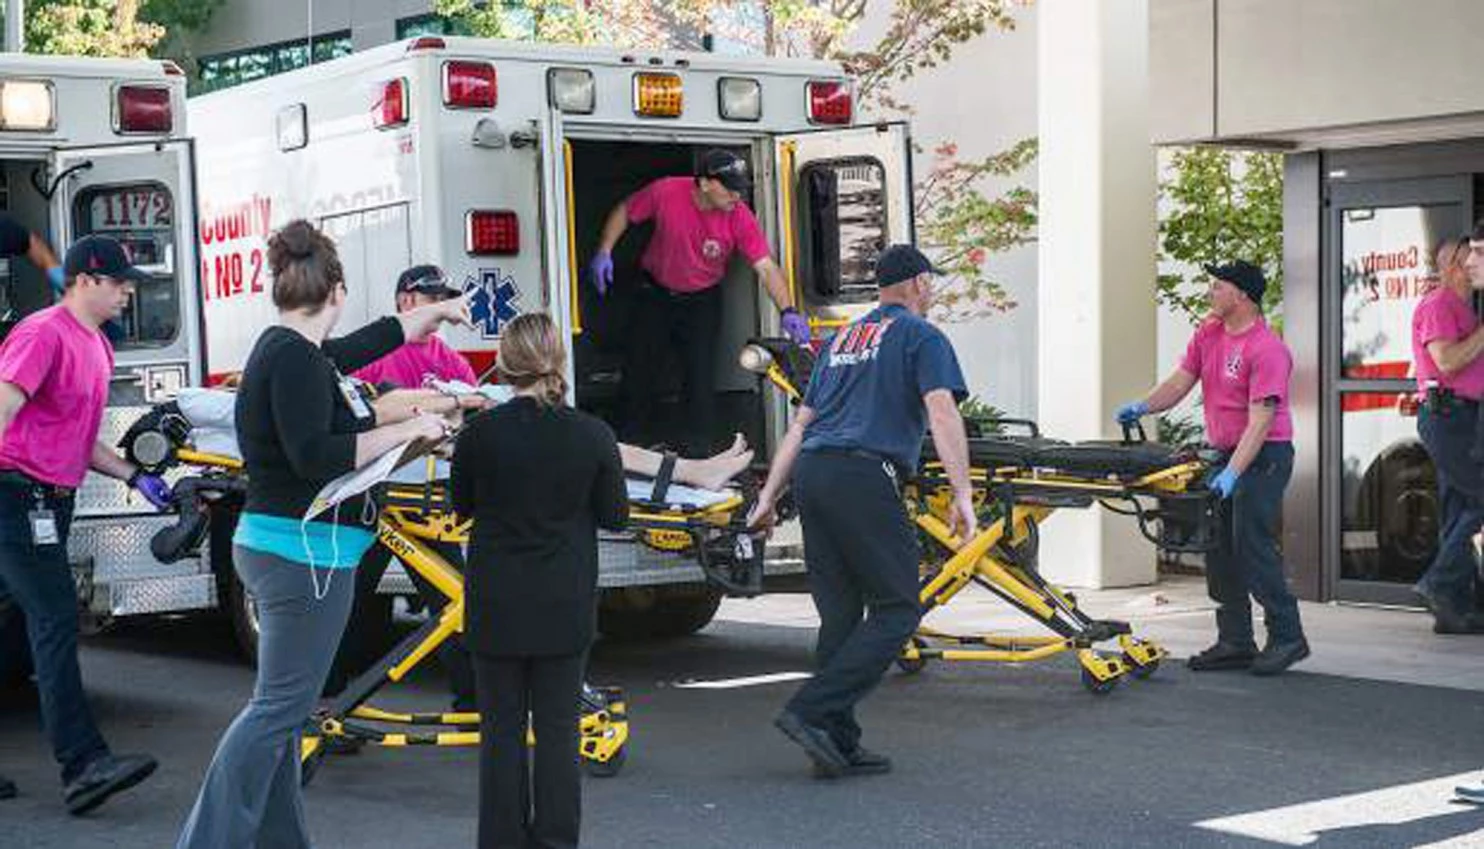 BREAKING: 10 Killed, 20 Injured At Oregon Community College By Gunman